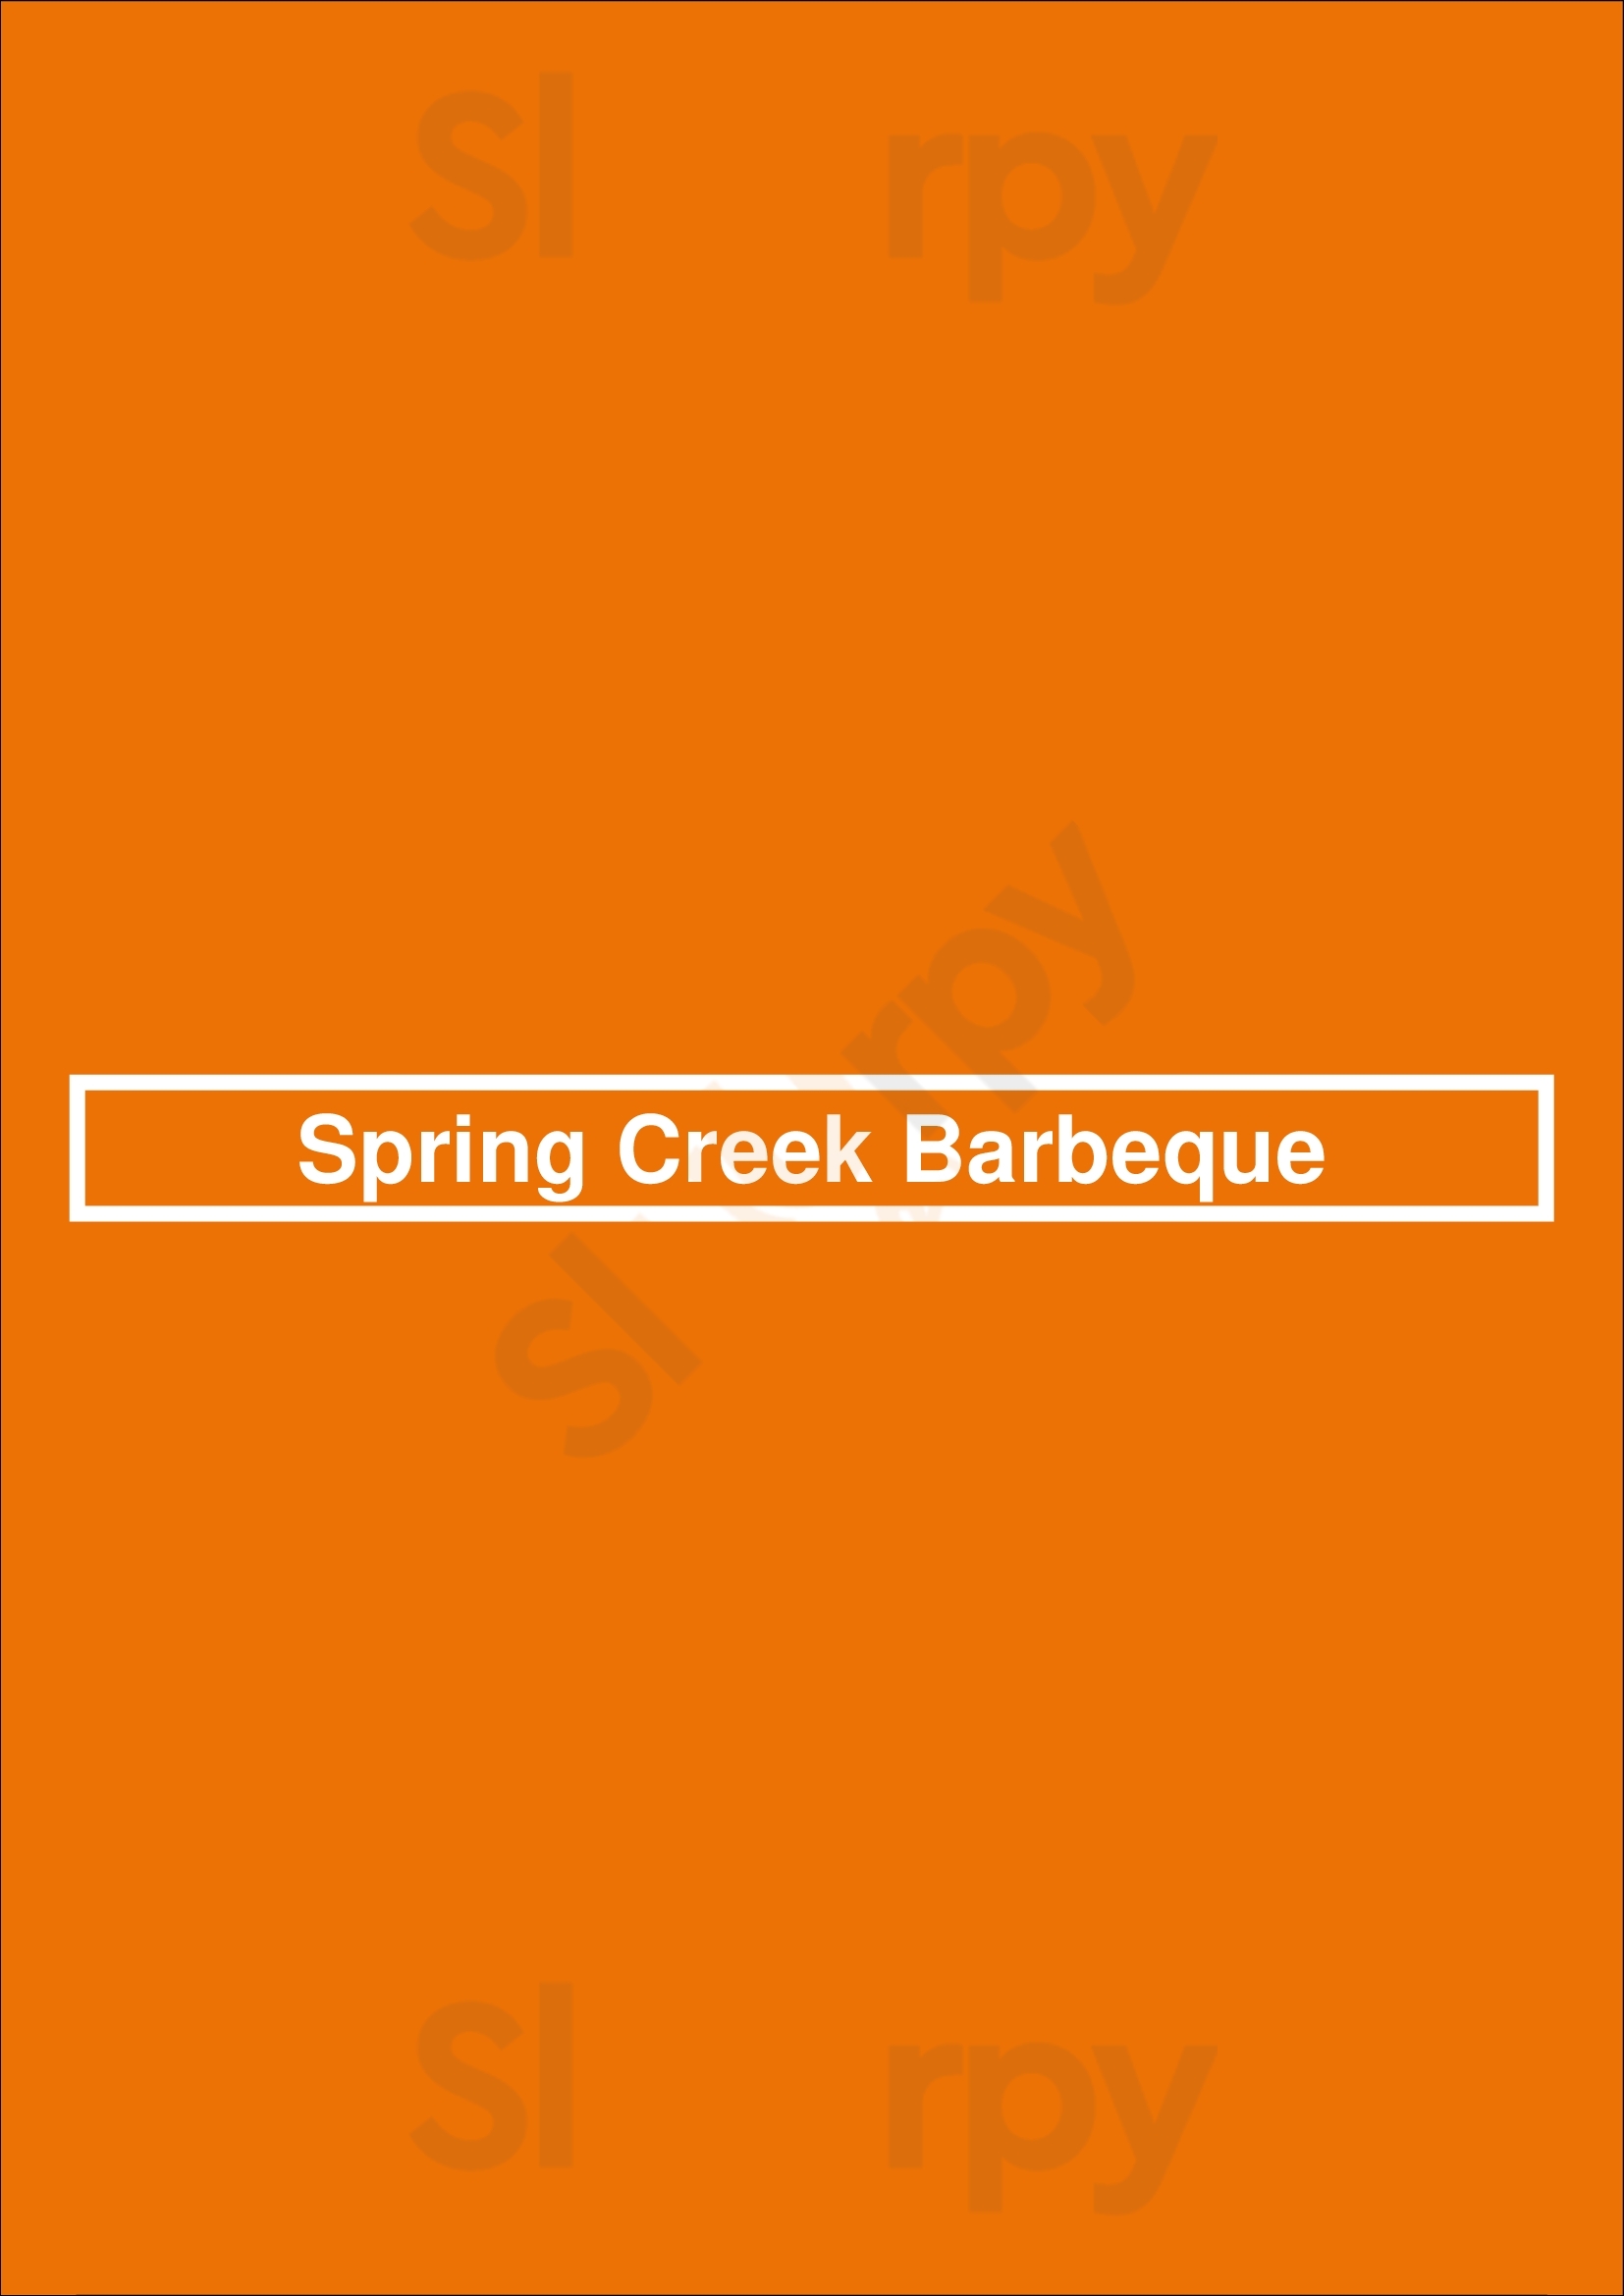 Spring Creek Barbeque Houston Menu - 1